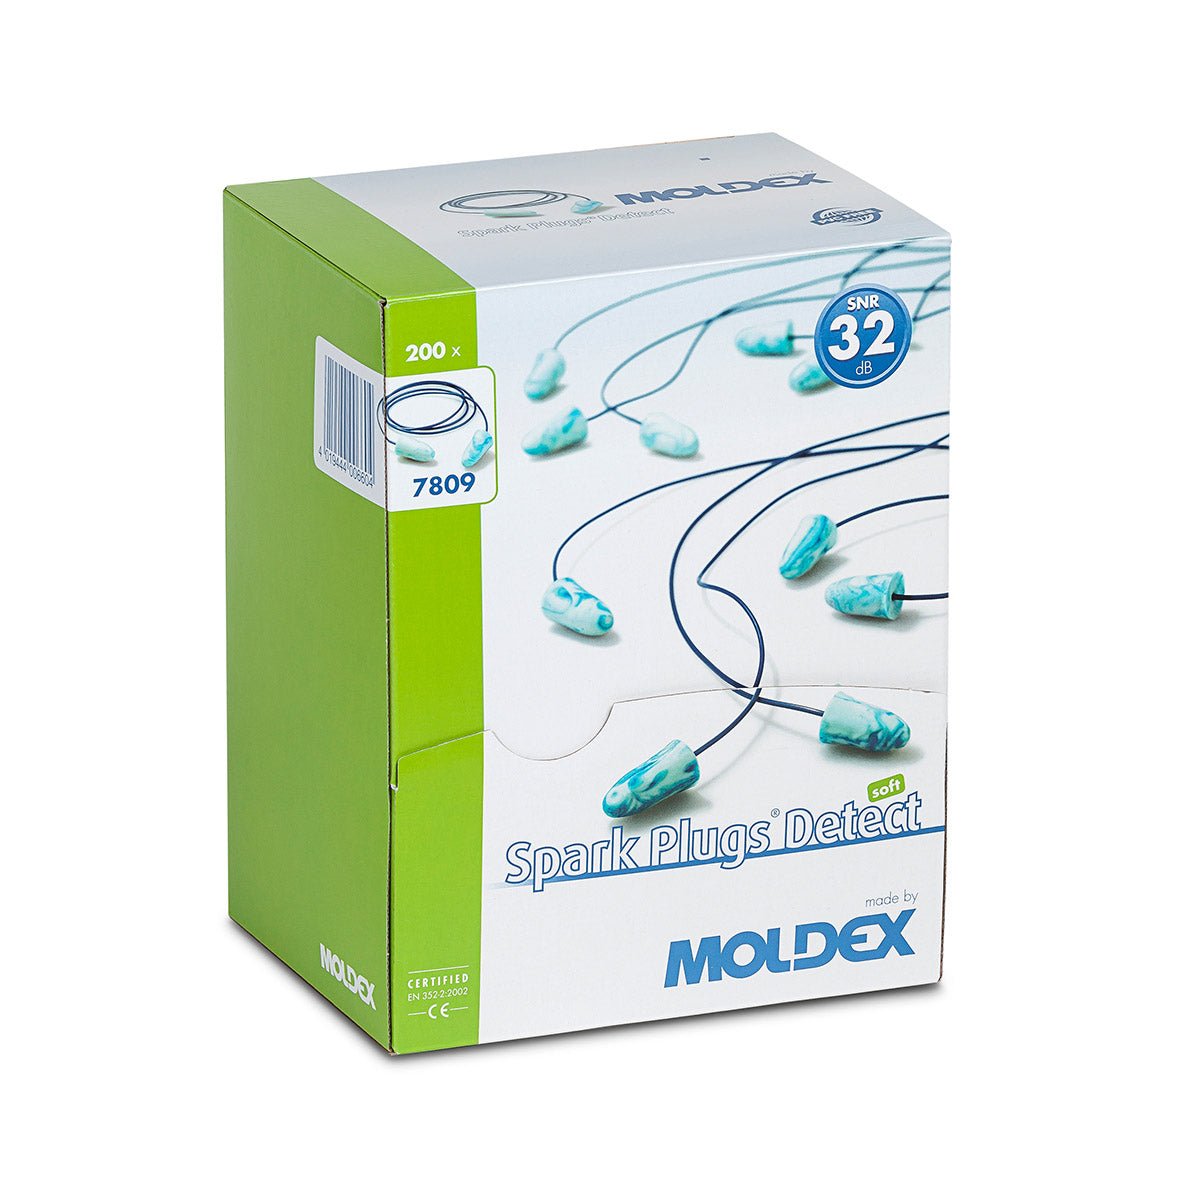 Moldex Spark Plugs Detect SNR 32 (200 Pairs) - DaltonSafety